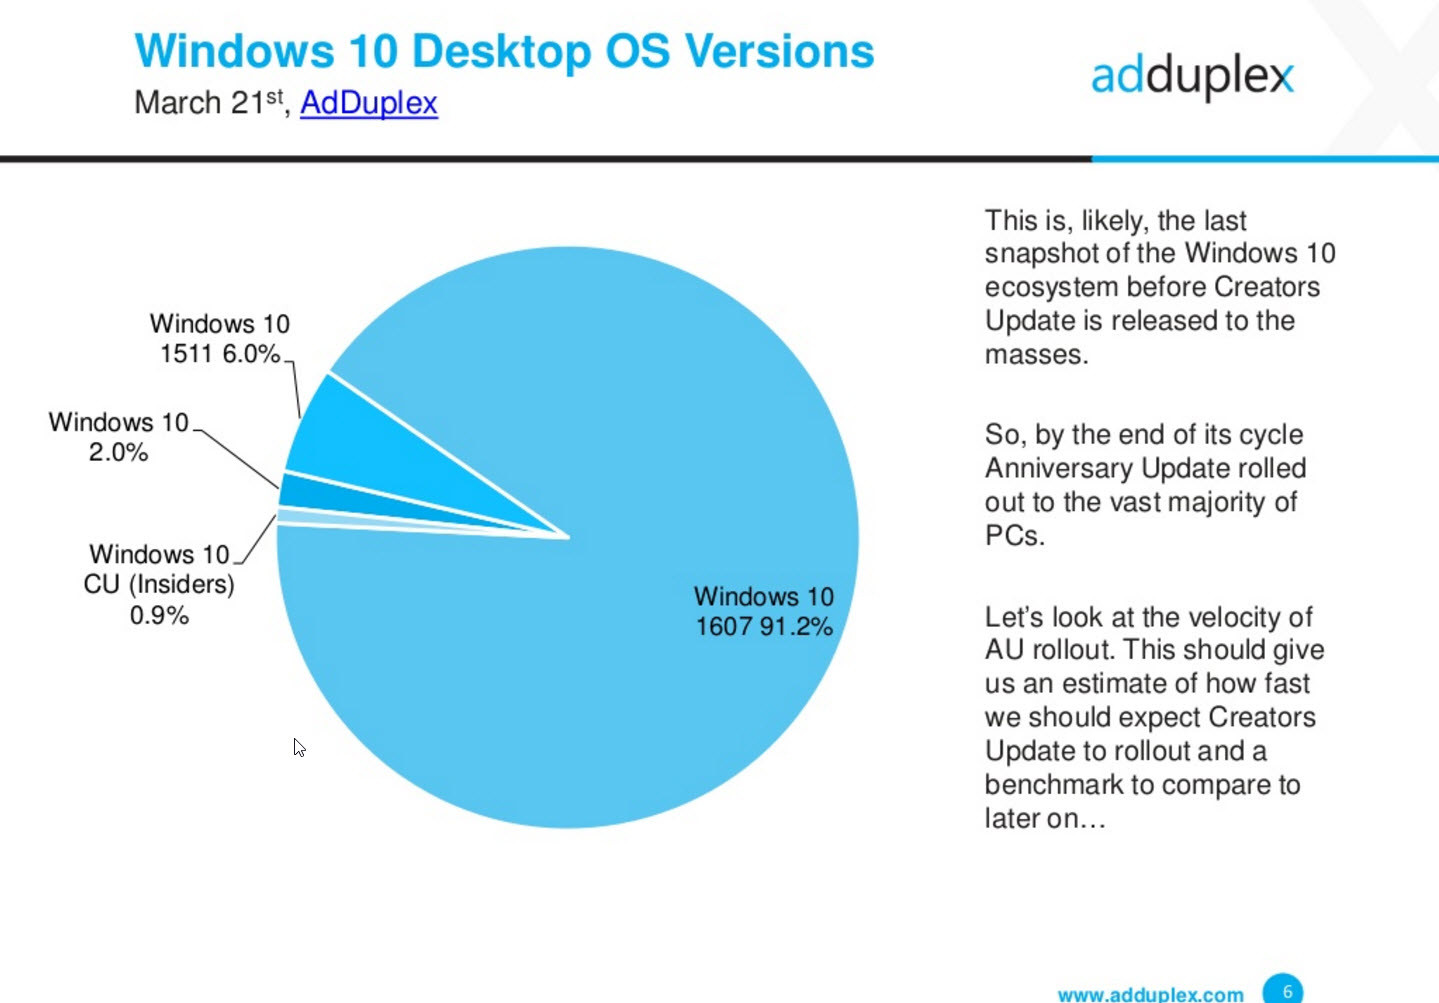 windows 10 os versions march 2017 adduplex 1439x1003 1